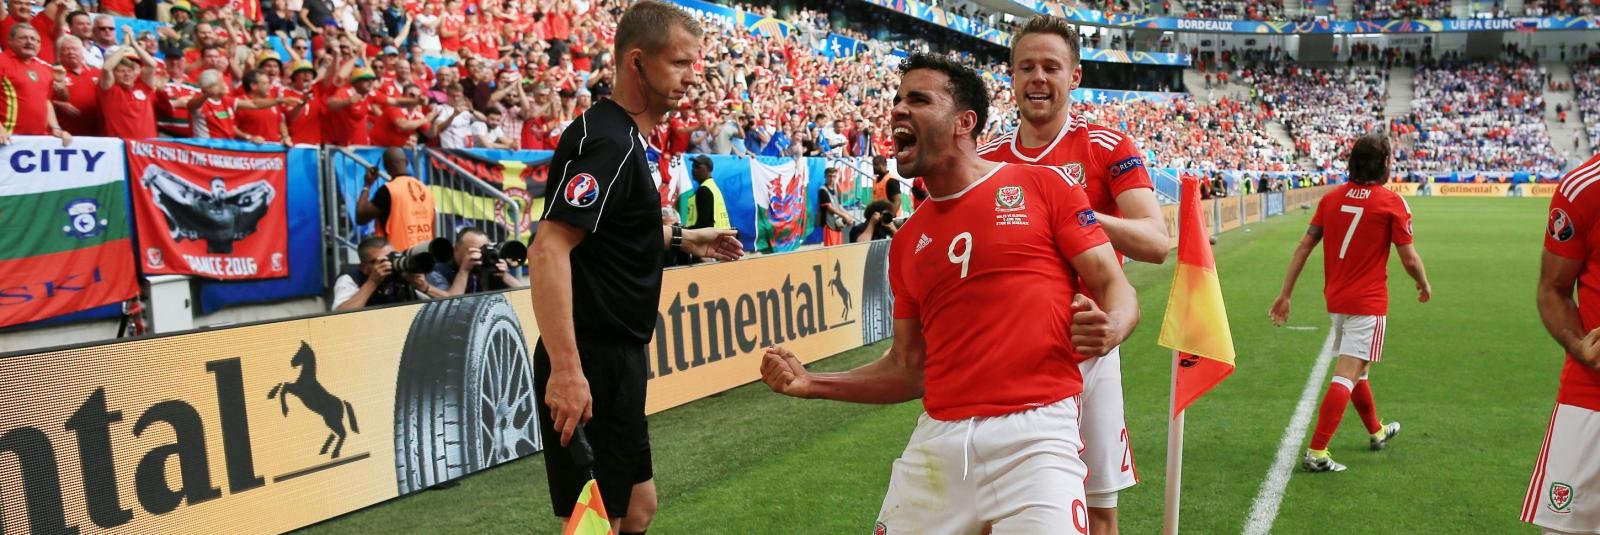 Wales vs Belgium: EURO 2016 Quarter-final Preview & Prediction